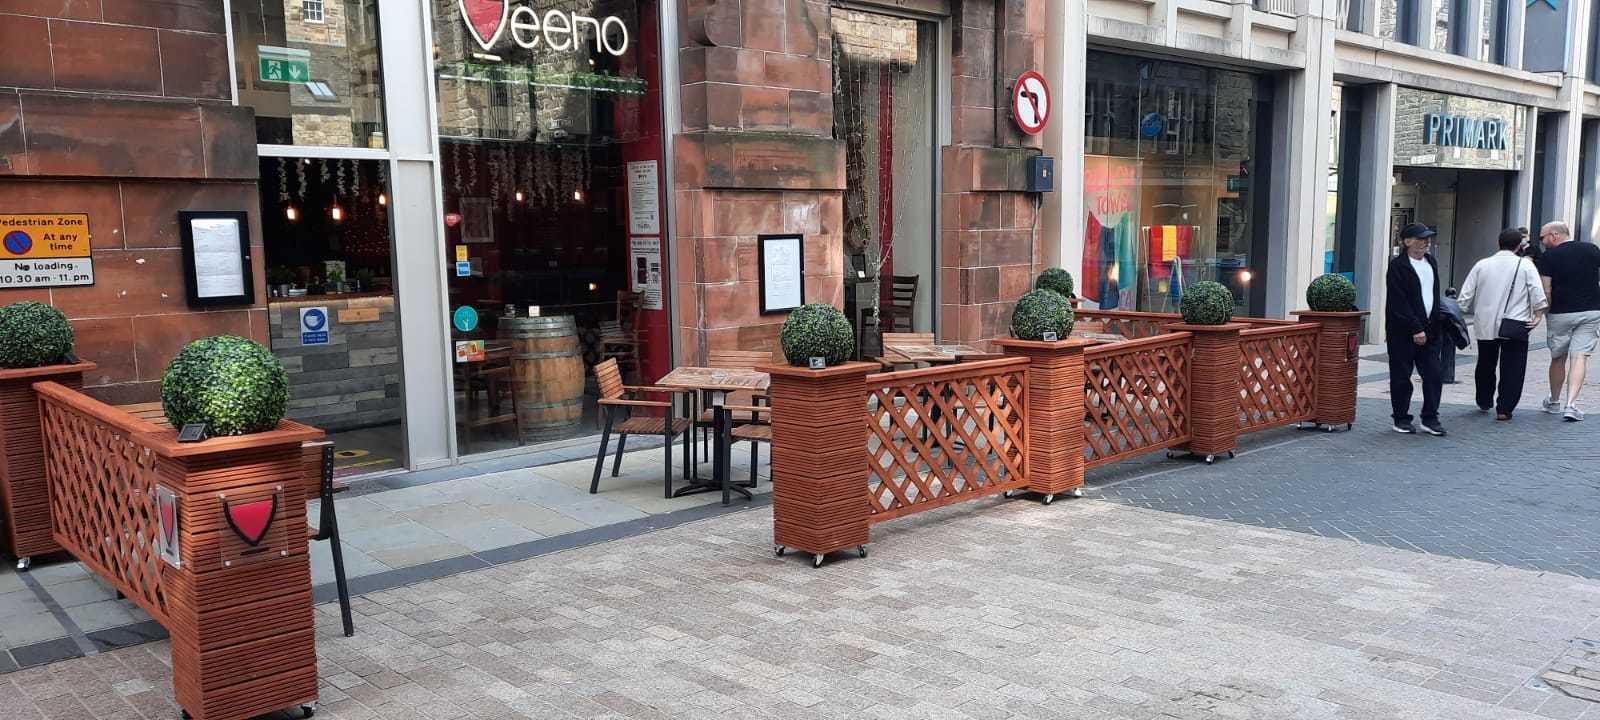 Veeno Edinburgh Rose Street, Exclusive Hire photo #1